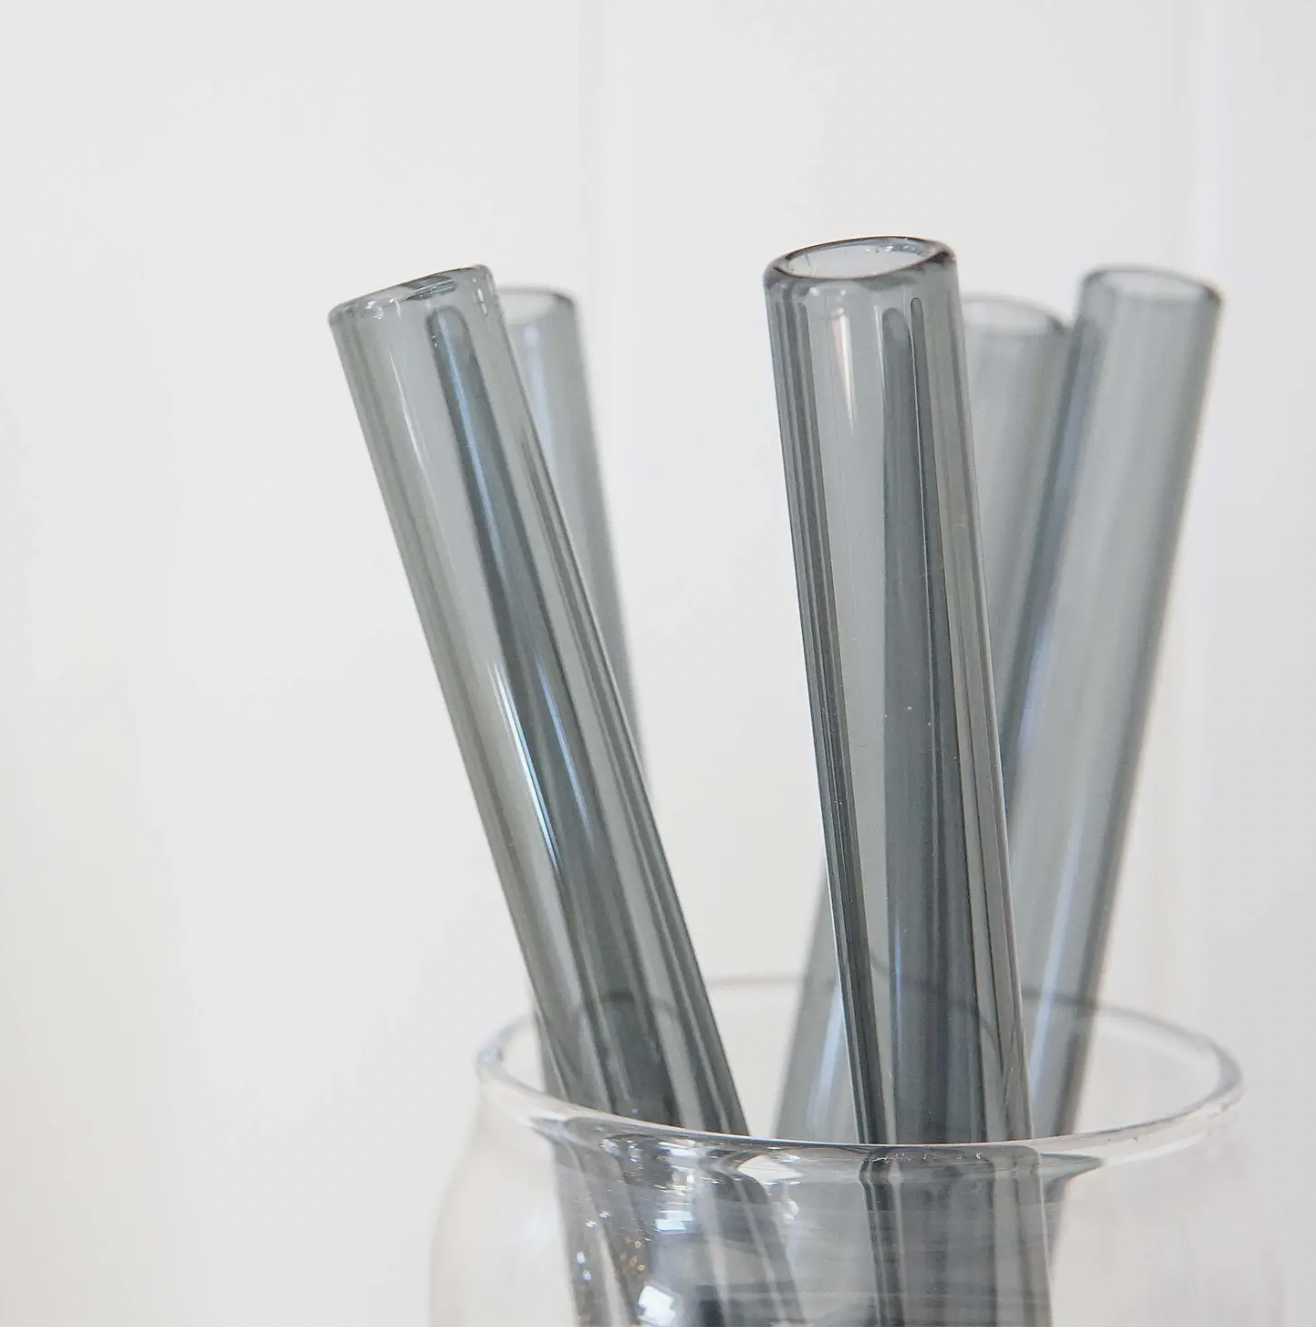 Boba Tea Glass Straw  Made in USA - Strawesome